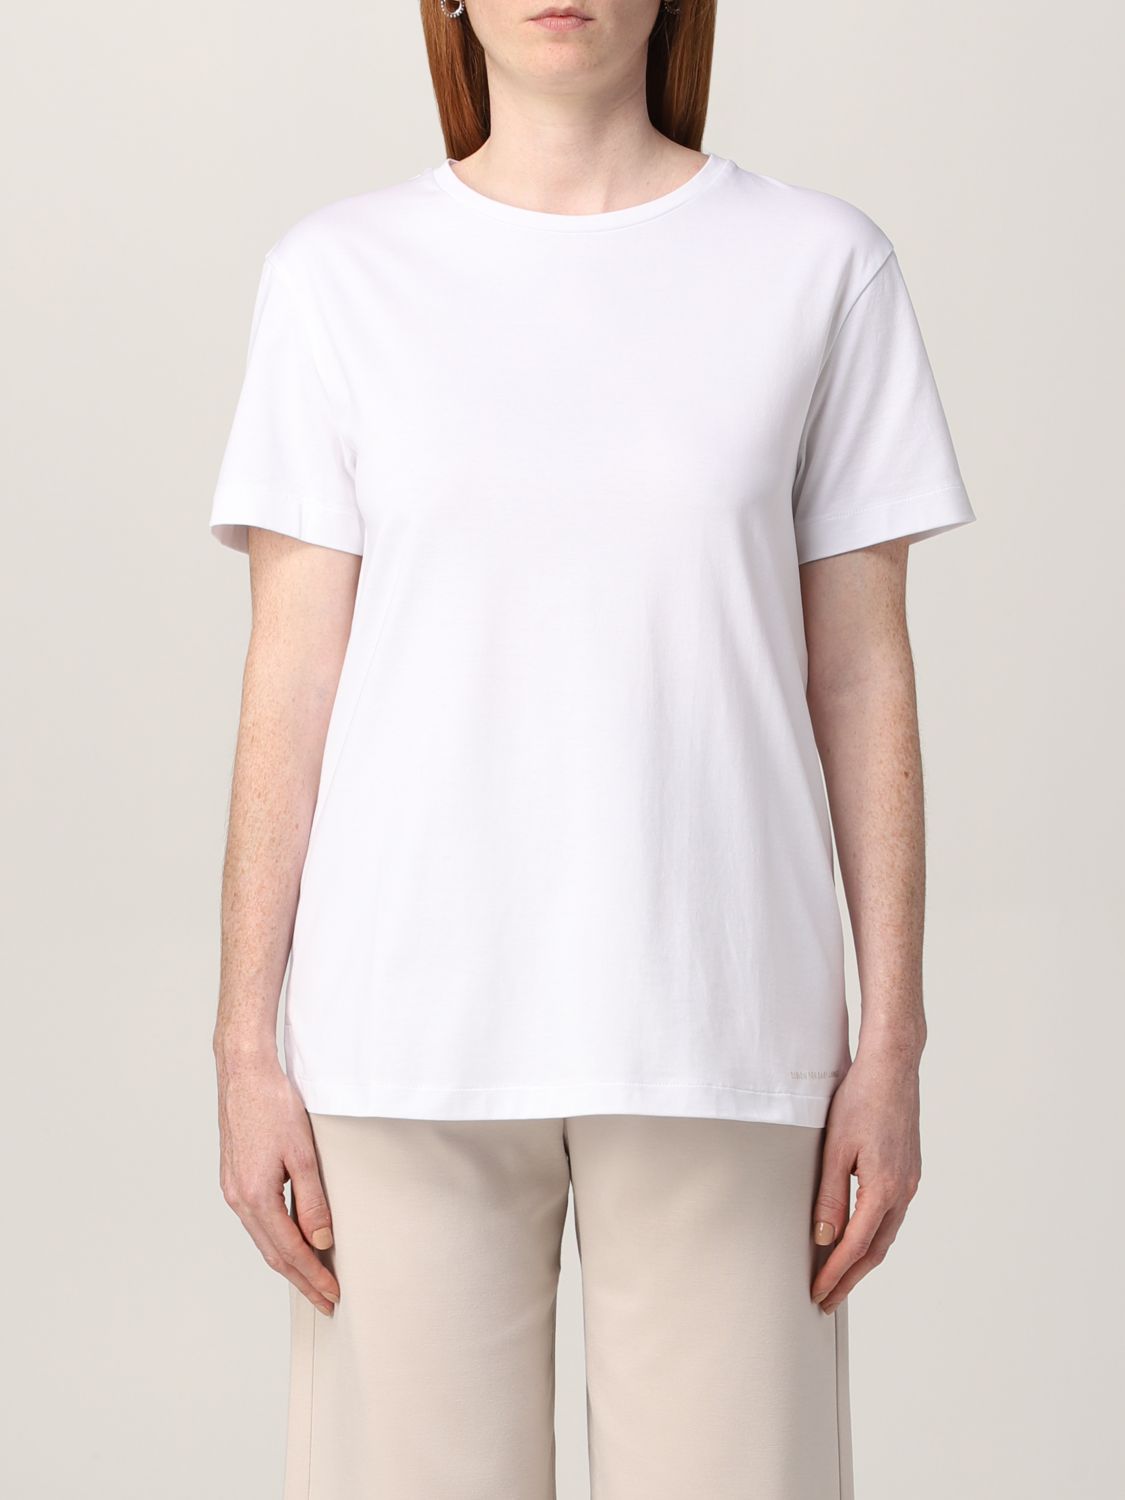 T-shirt S Max Mara: T-shirt basic S Max Mara in cotone bianco 1